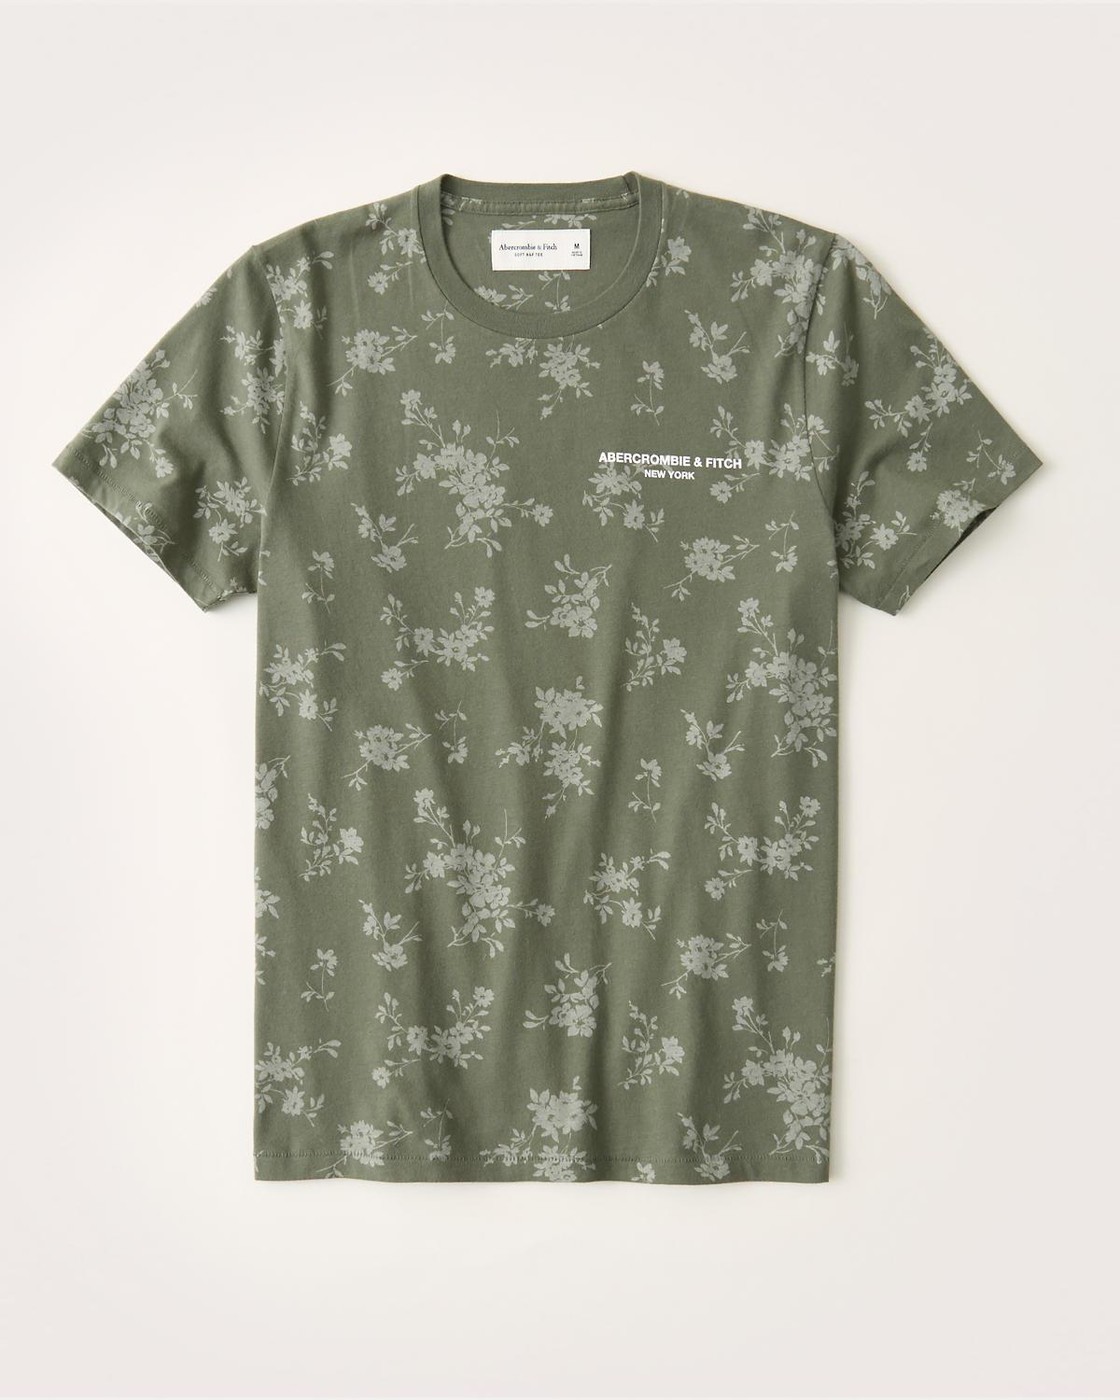 Зеленая футболка - мужская футболка Abercrombie & Fitch, XL, XL